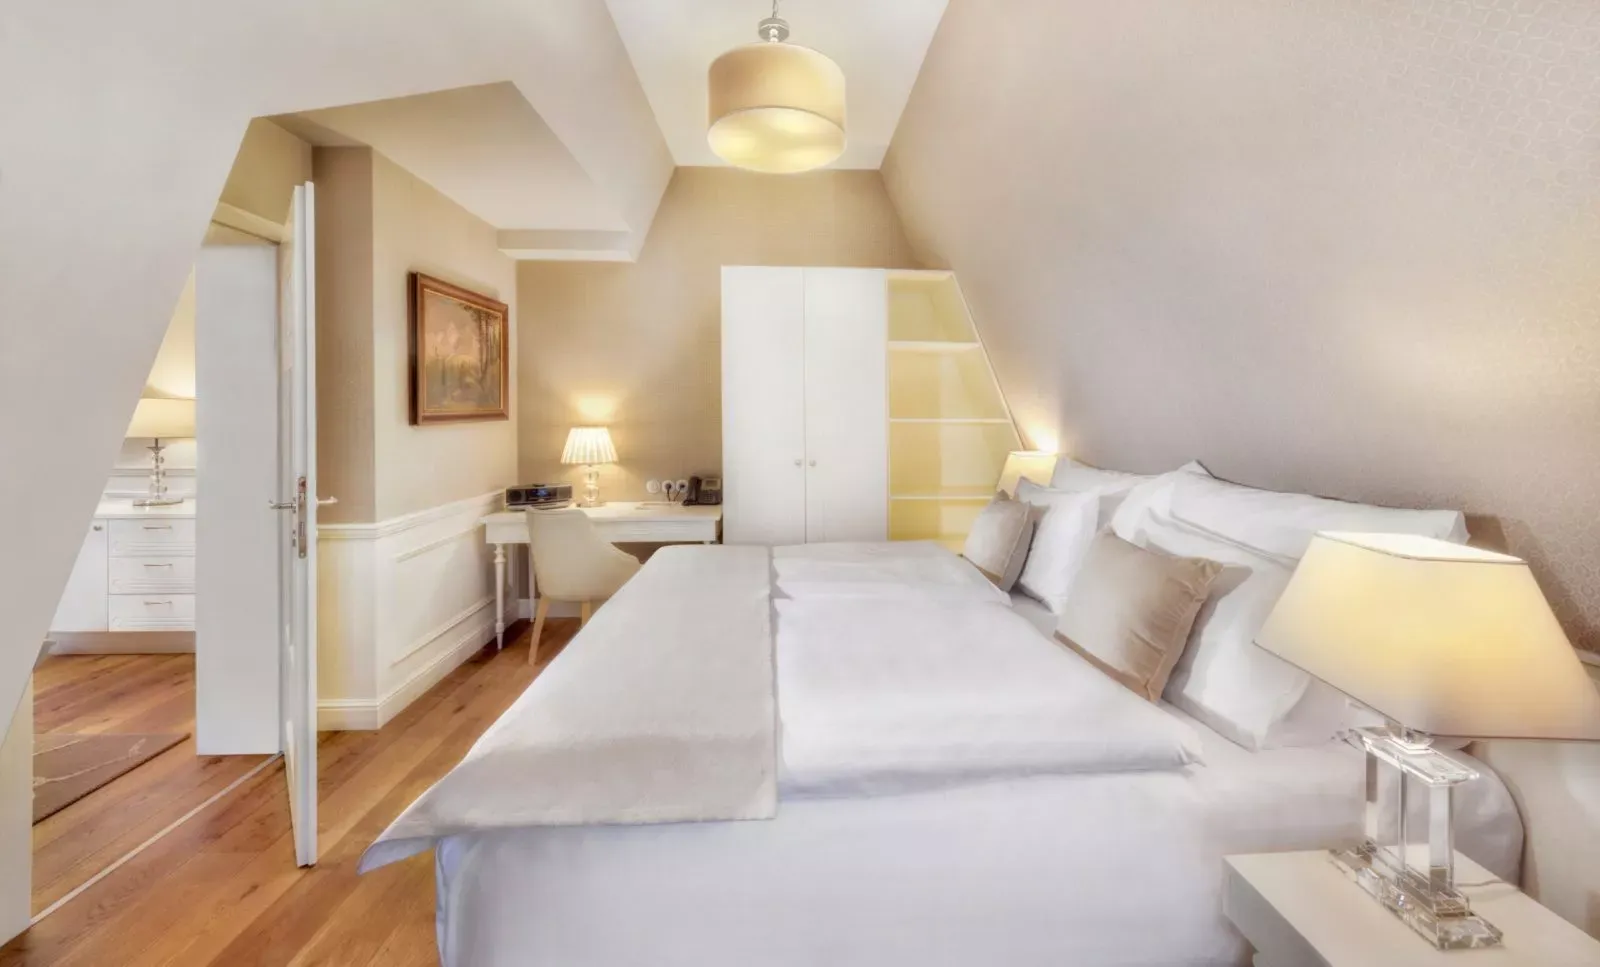 2 Apartmán Ferdinand Hotel Lomnica interier 2017 59 2 scaled